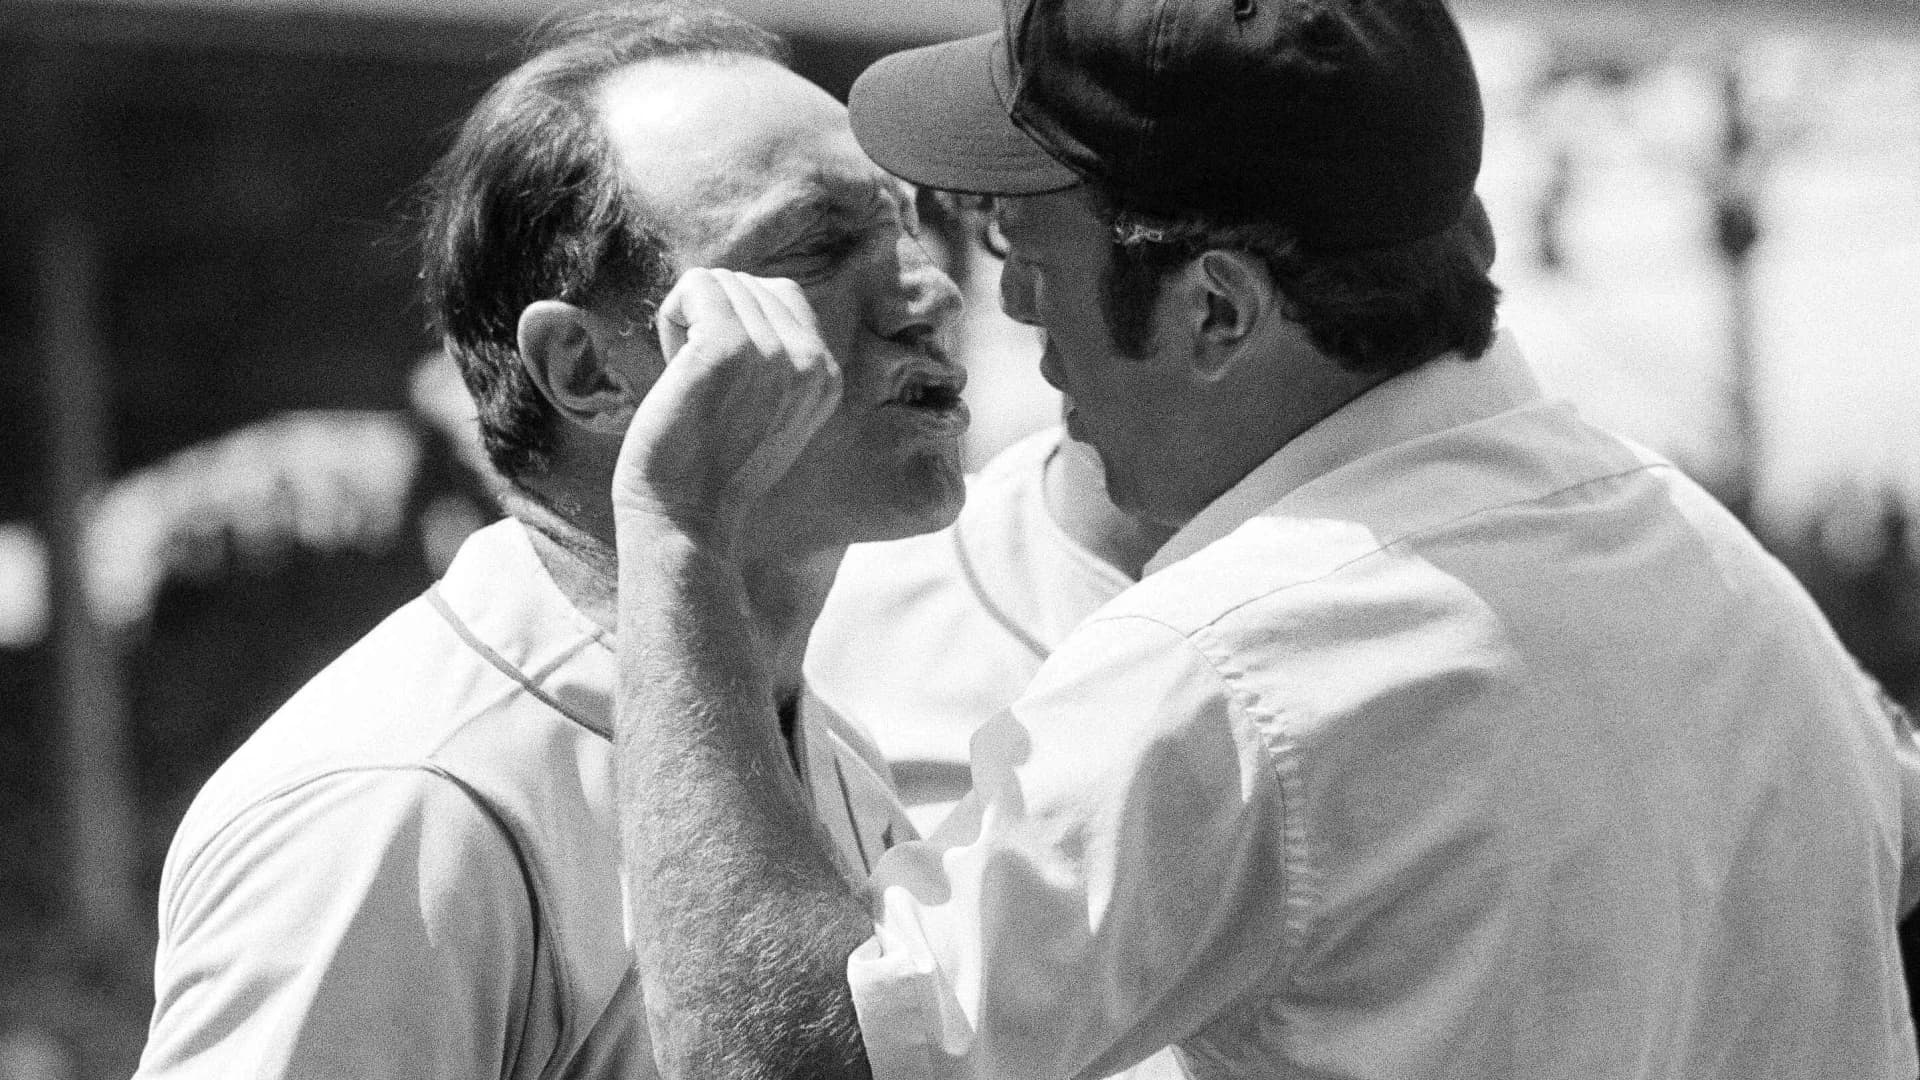 Ex-Brooklyn Dodgers catcher, Mets coach Pignatano dies at 92